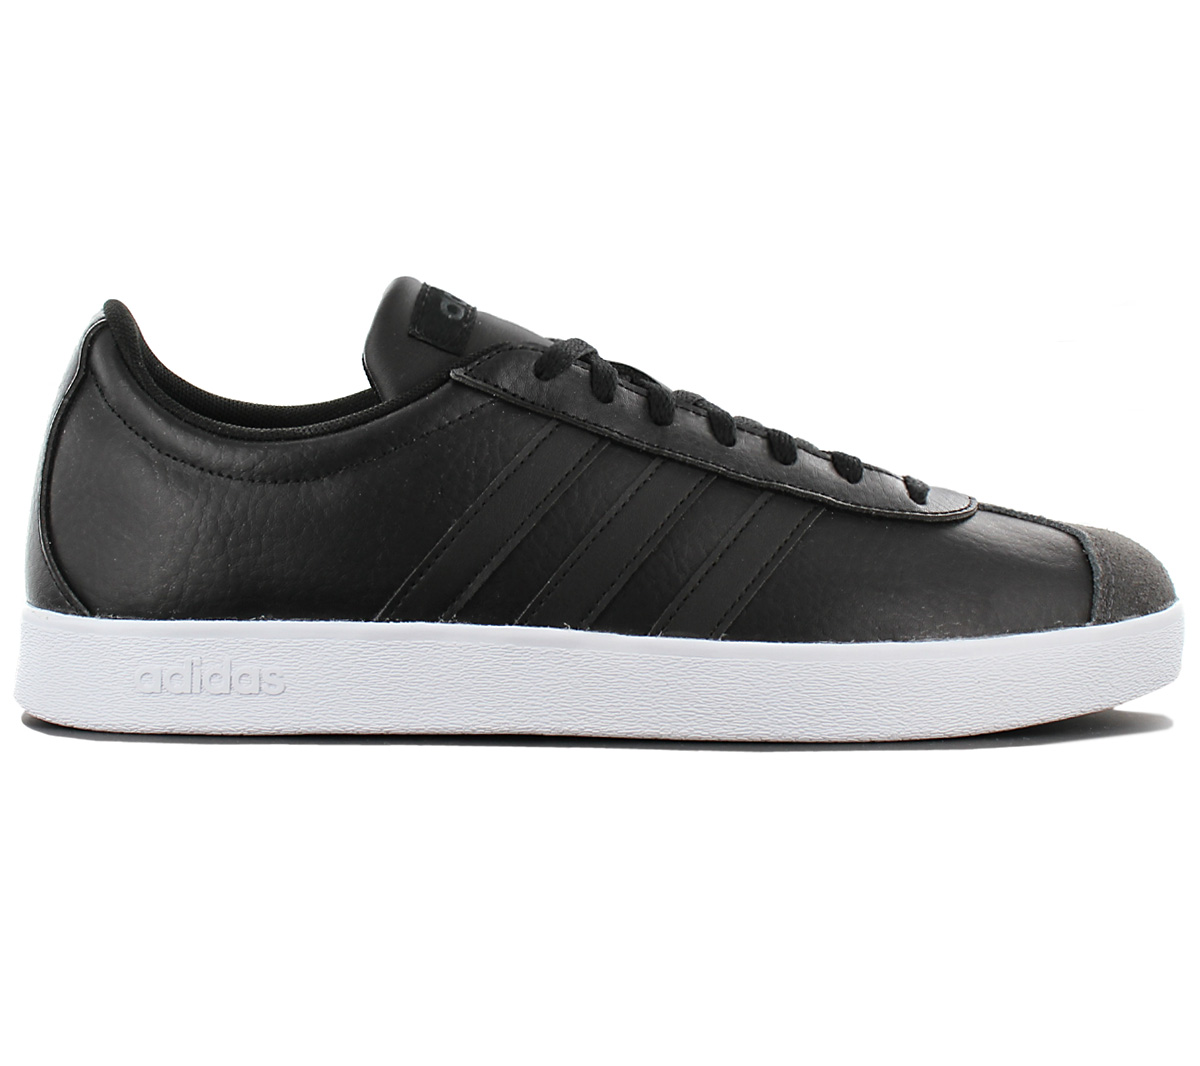 Adidas court Leather Vl 2.0 Men's Sneaker Shoes Leather Black DA9885  Trainers | eBay